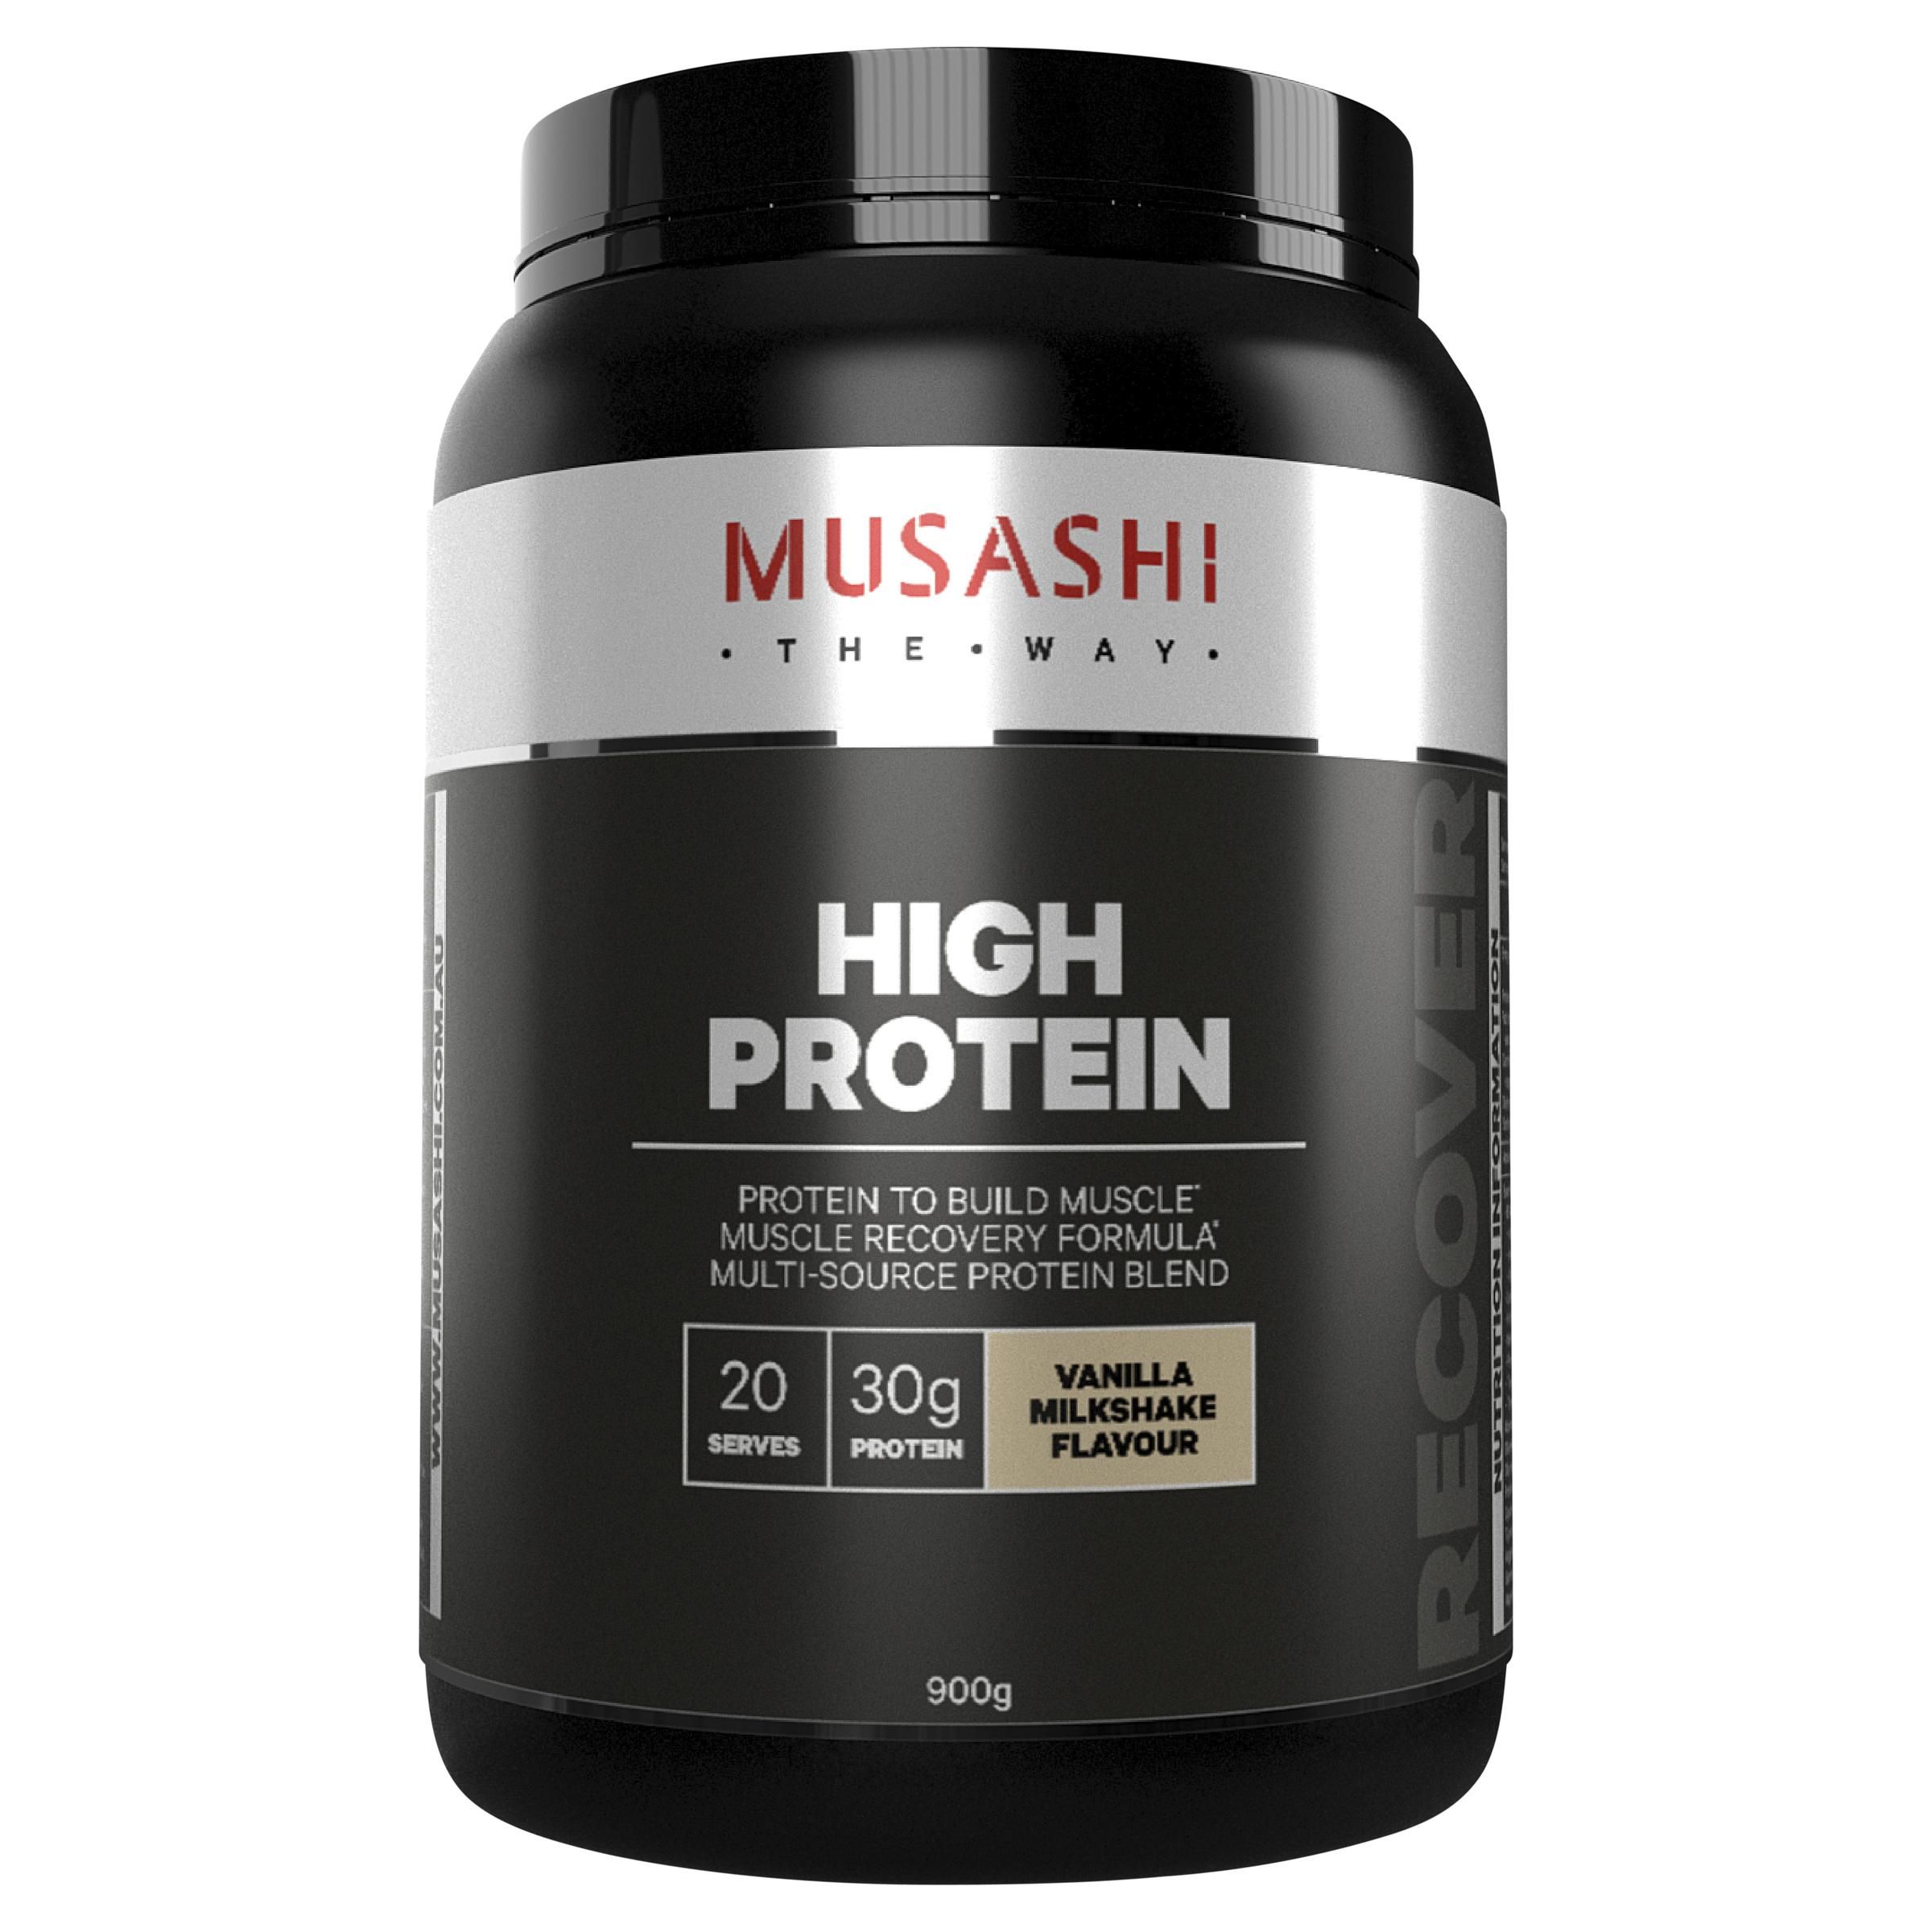 Craft протеин. Musashi Protein. Musashi High Protein. Протеин американский фирмы. High Whey Protein.